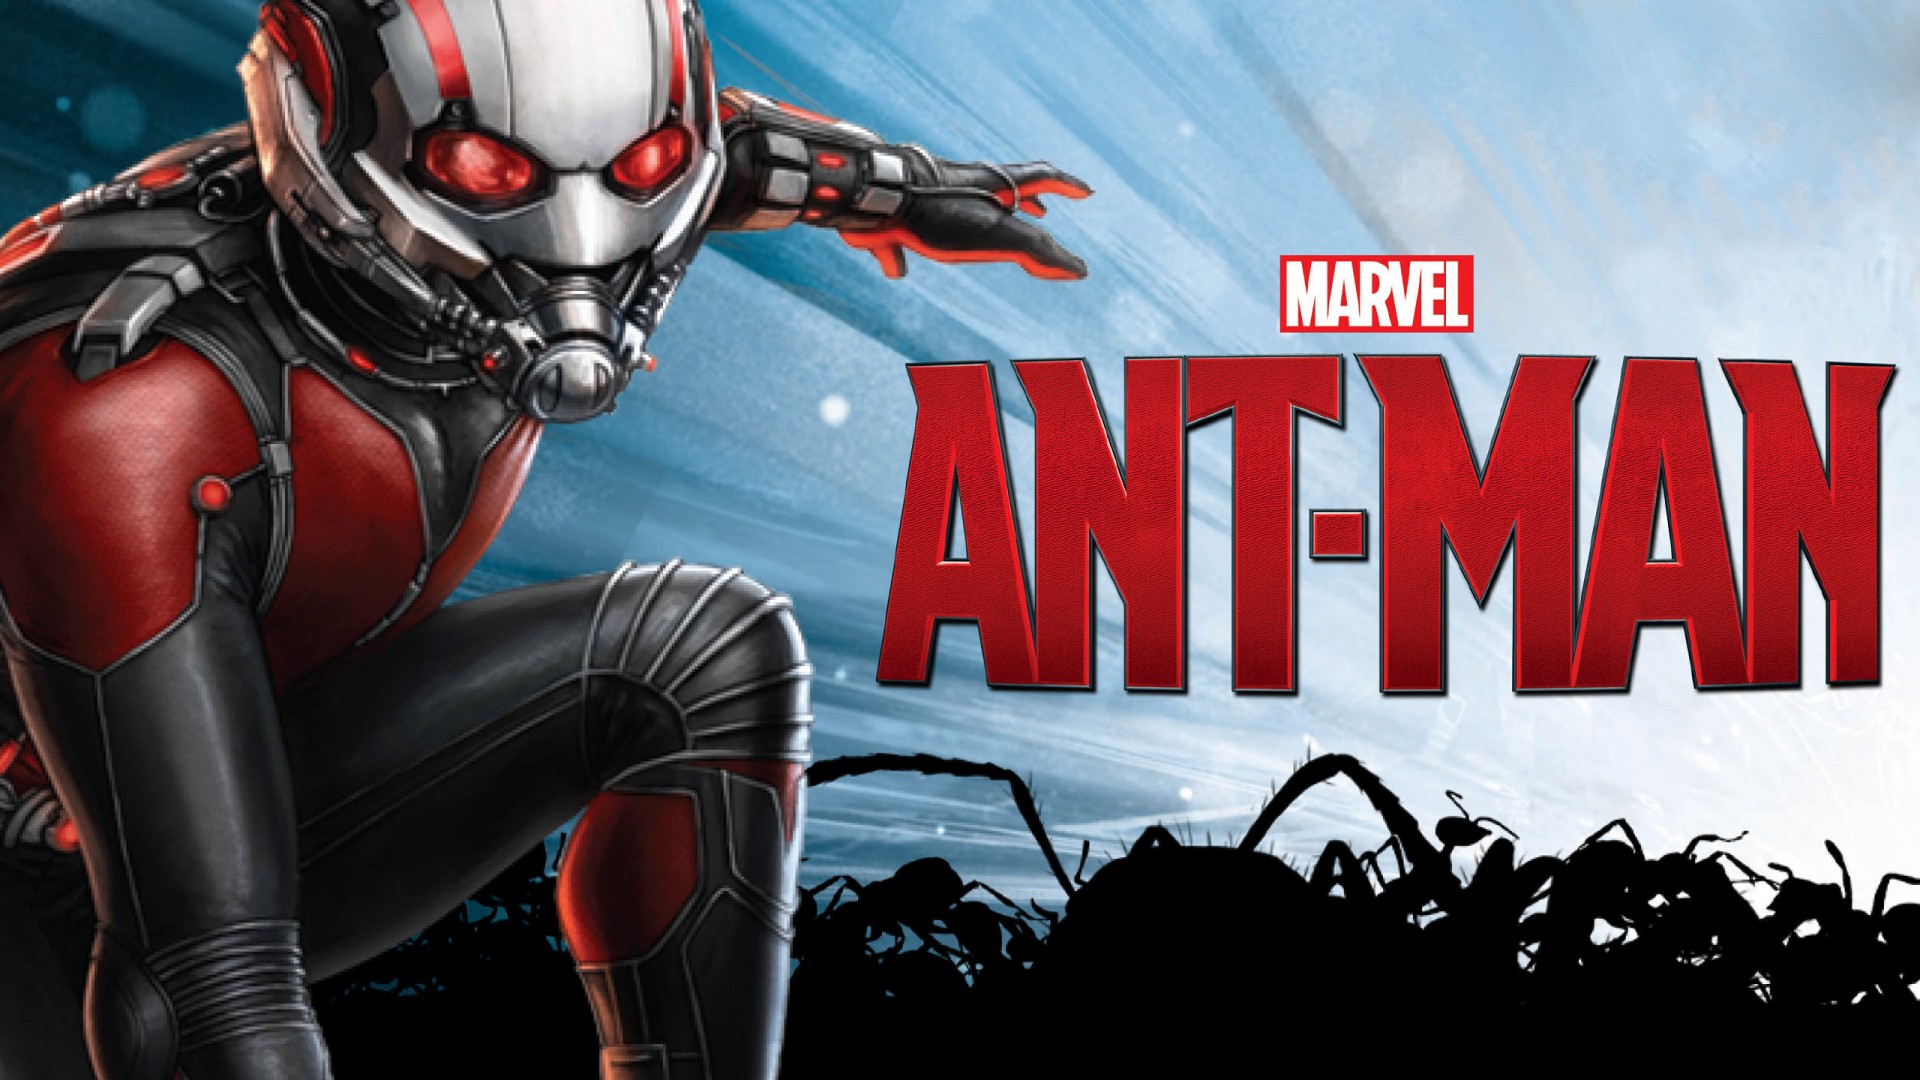 http://uupload.ir/files/h48e_marvel-ant-man-2015-movie-poster.jpg